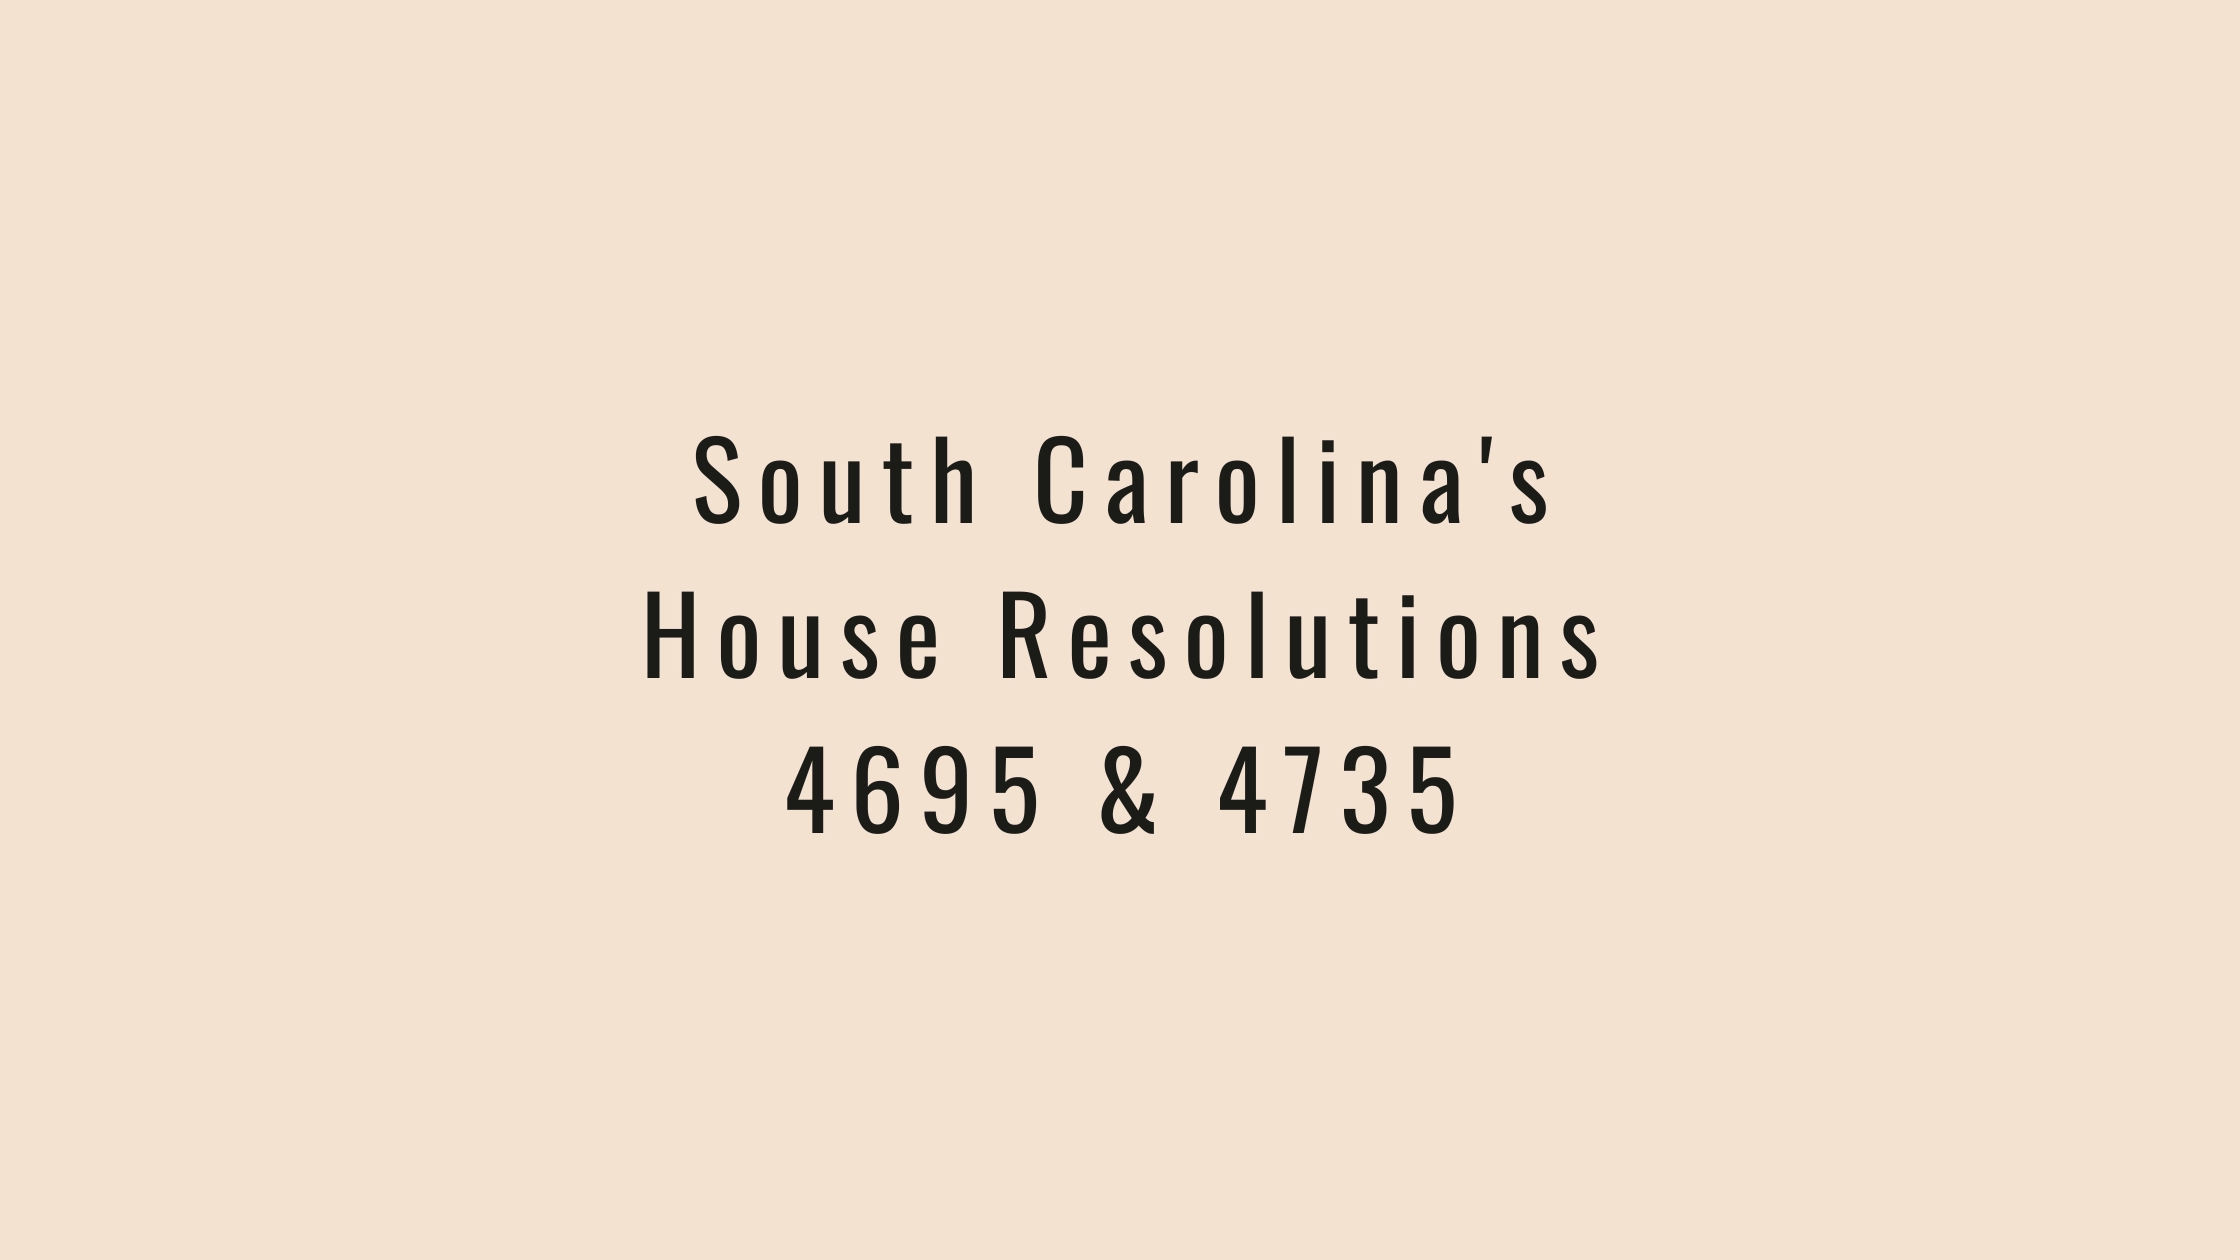 South Carolina's House Resolutions 4695 & 4735